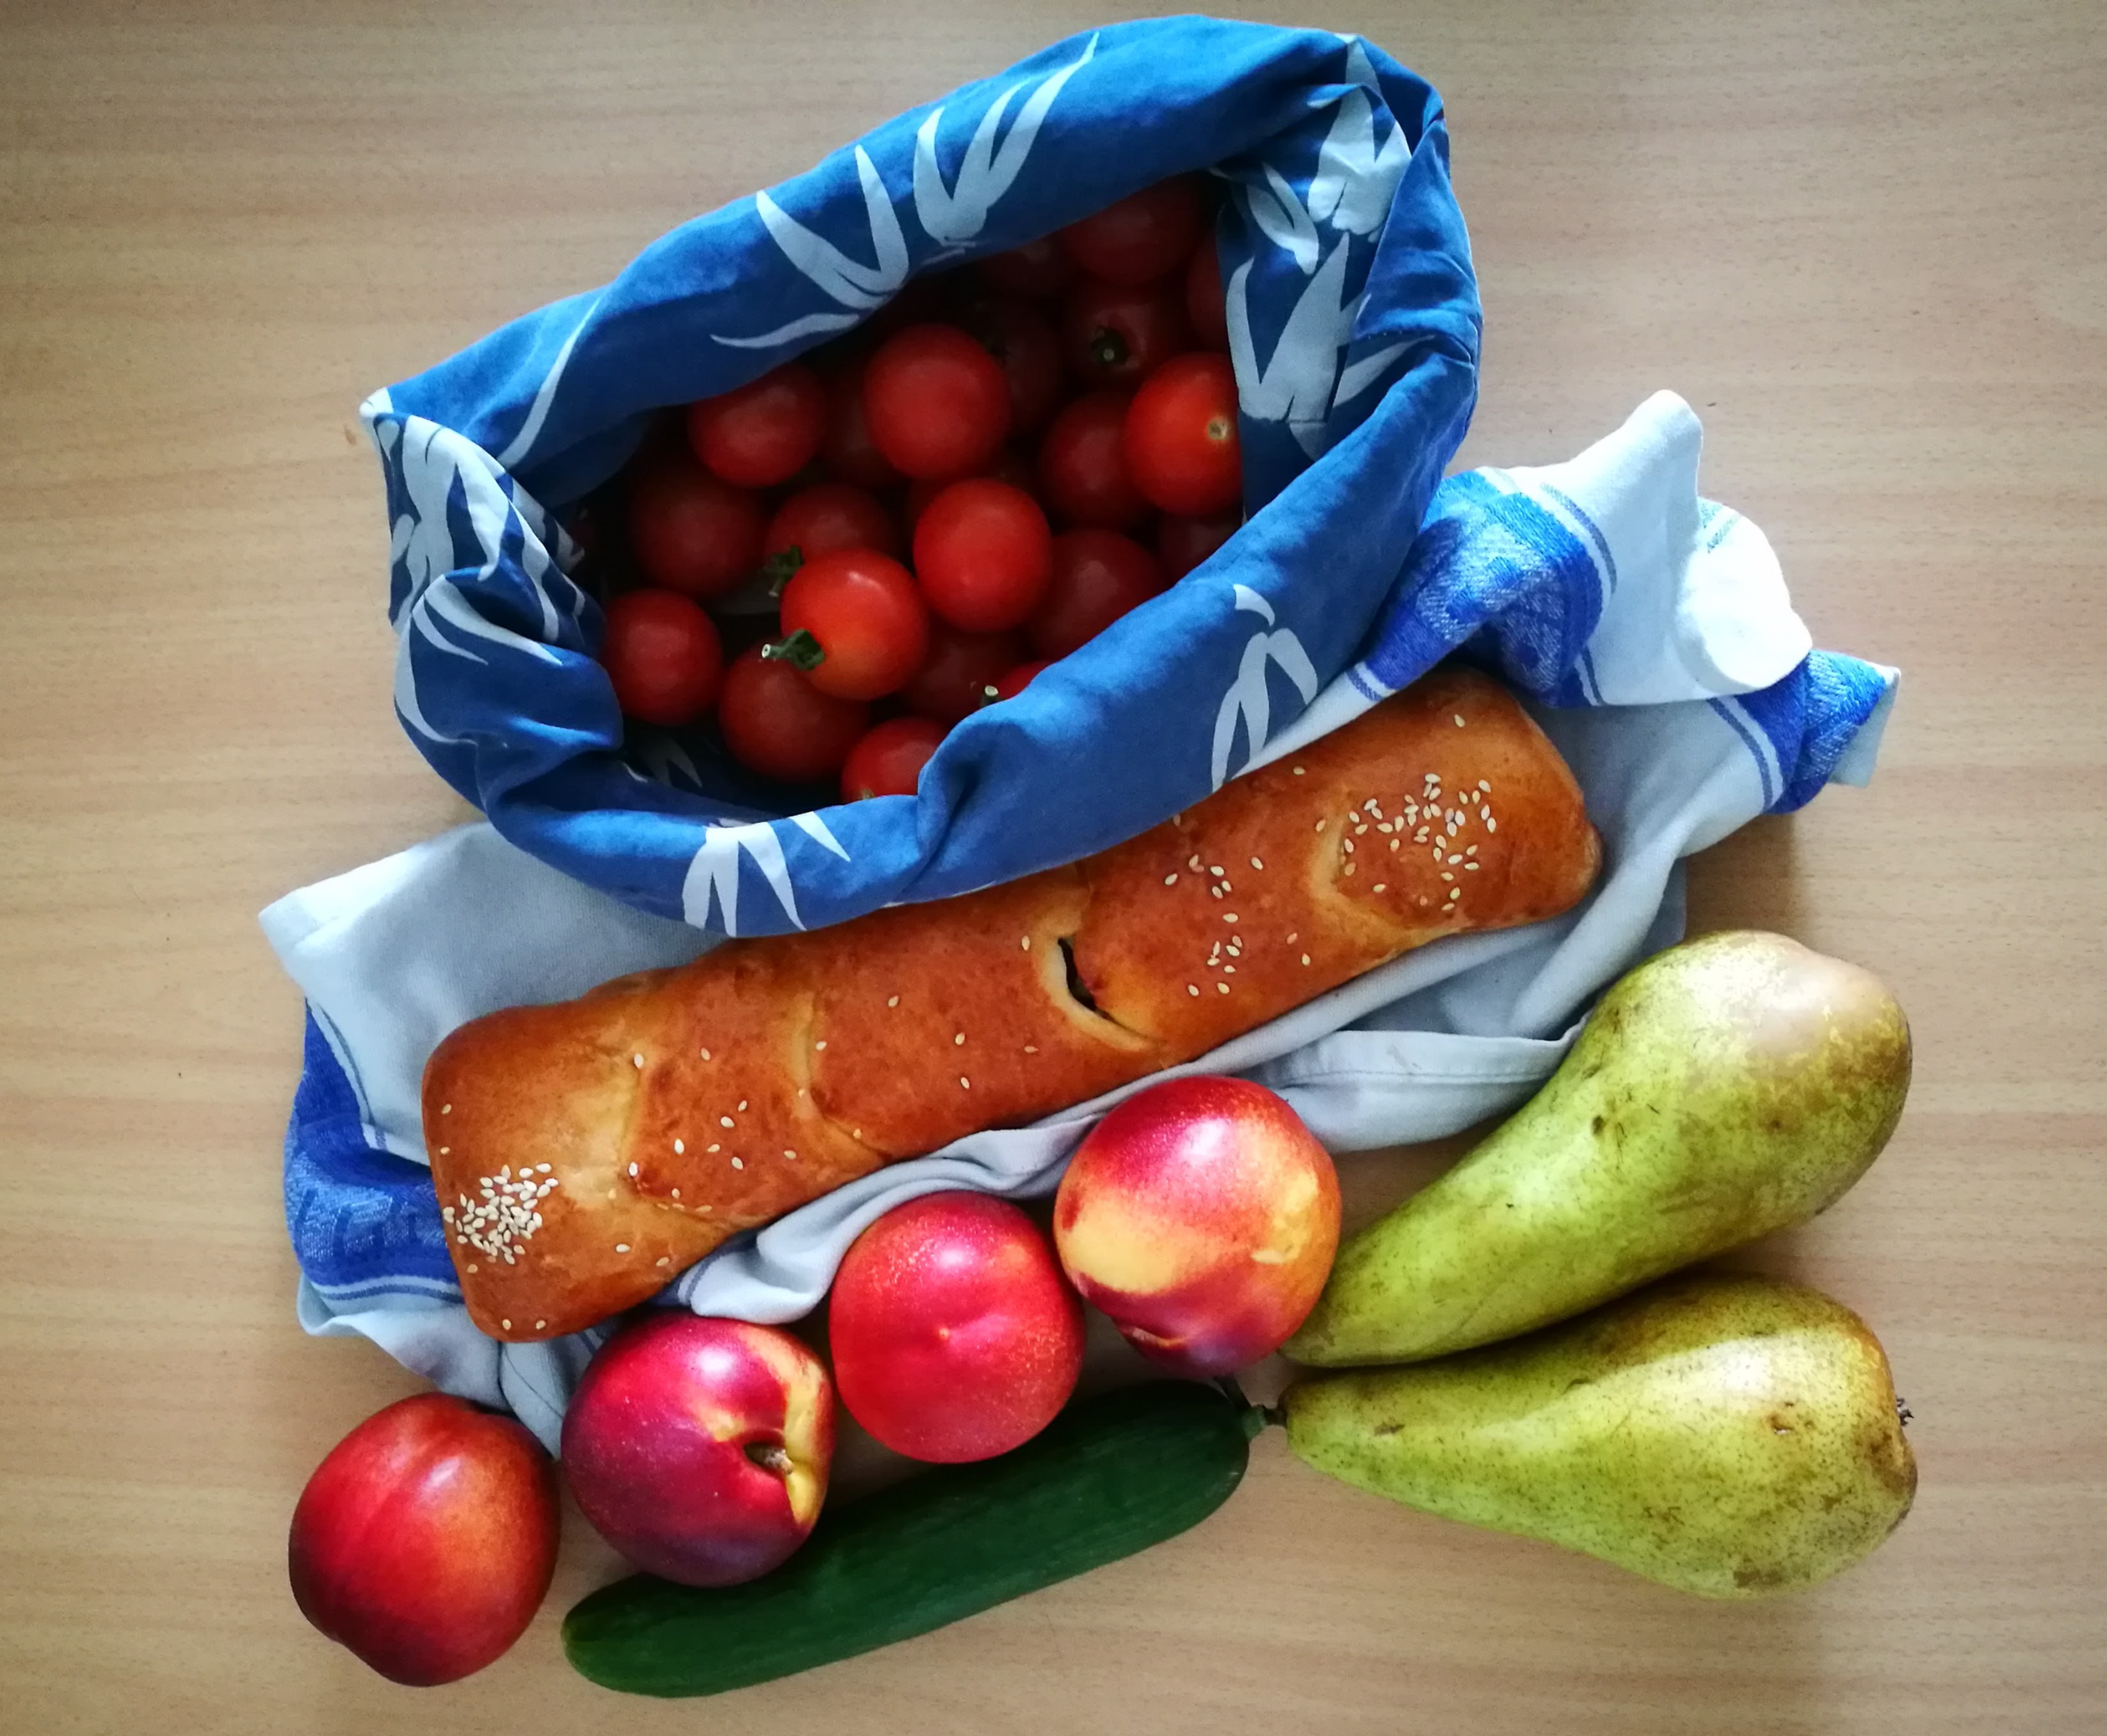 plastic free shopping. bread, tomatoes, fruit.